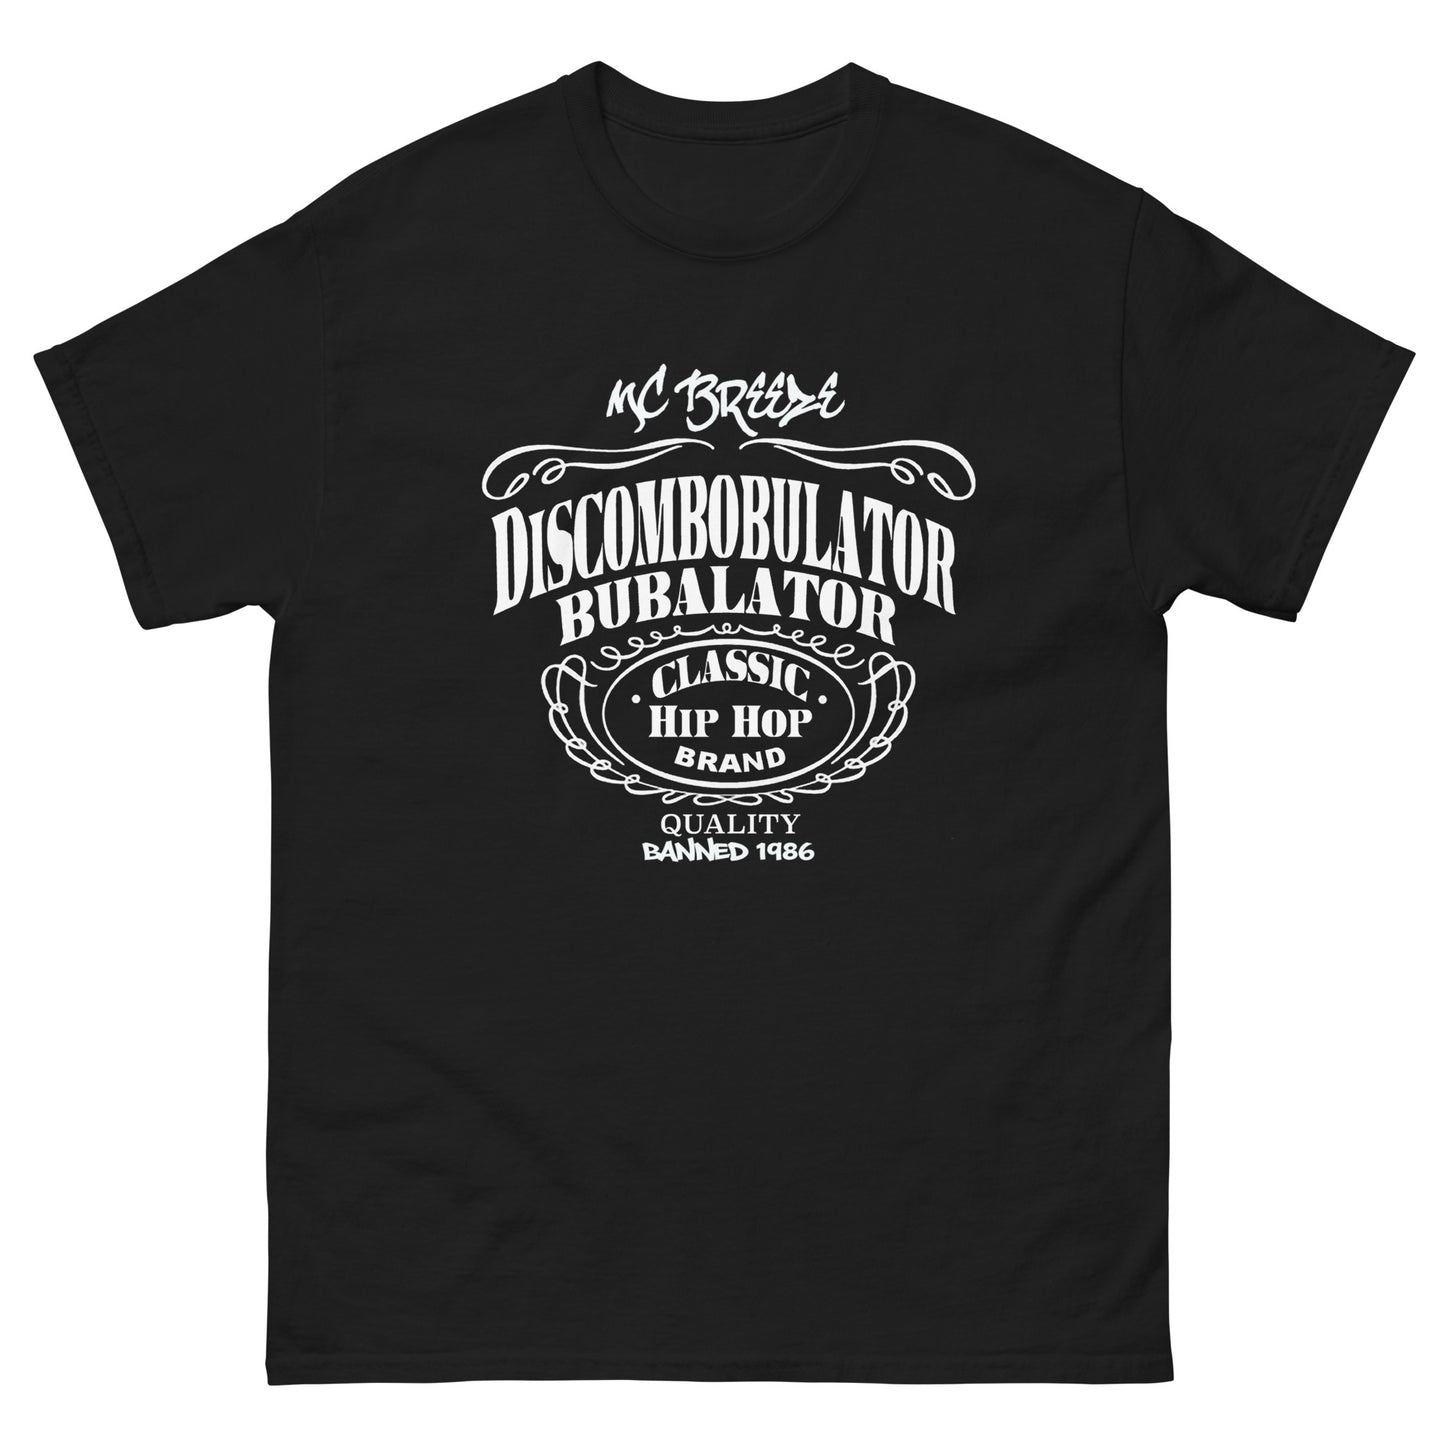 New Discombobulatorbubalator T-shirt Men's classic tee